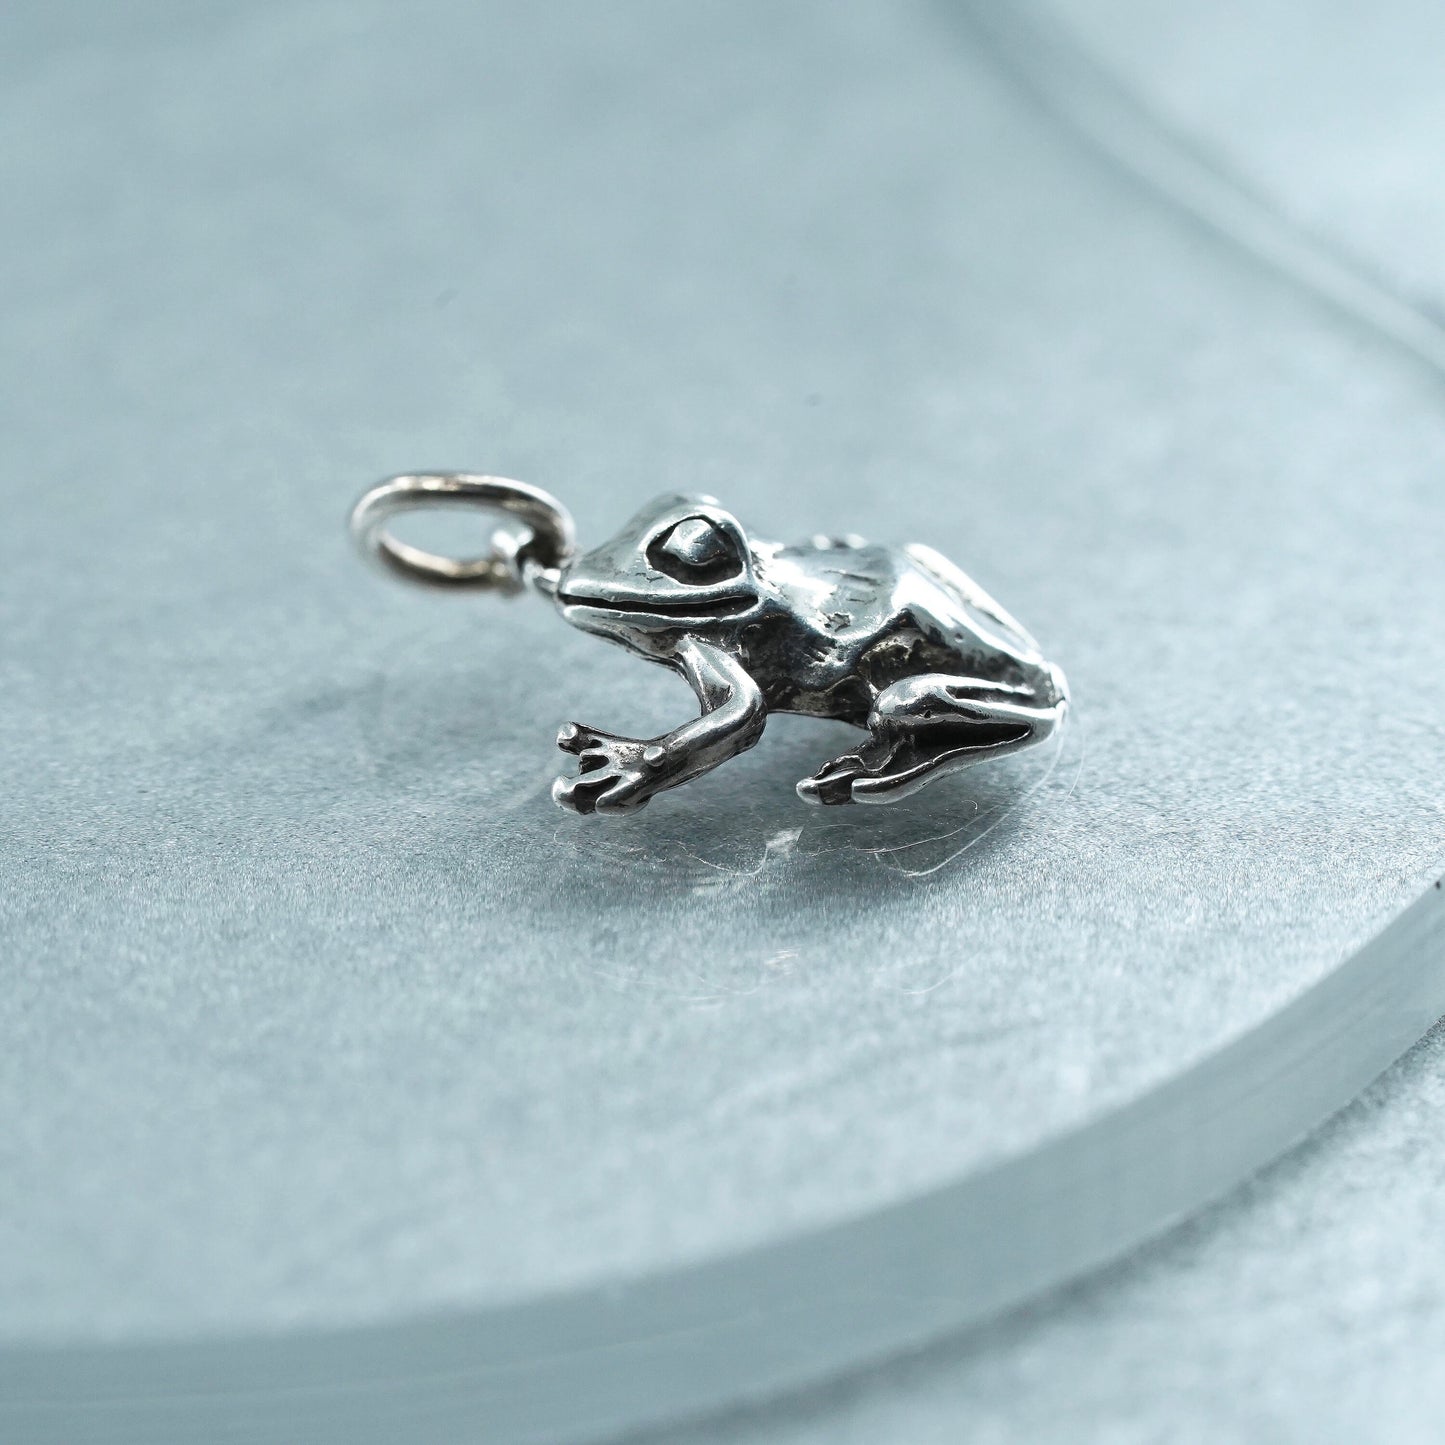 Vintage Sterling 925 silver handmade pendant, frog charm